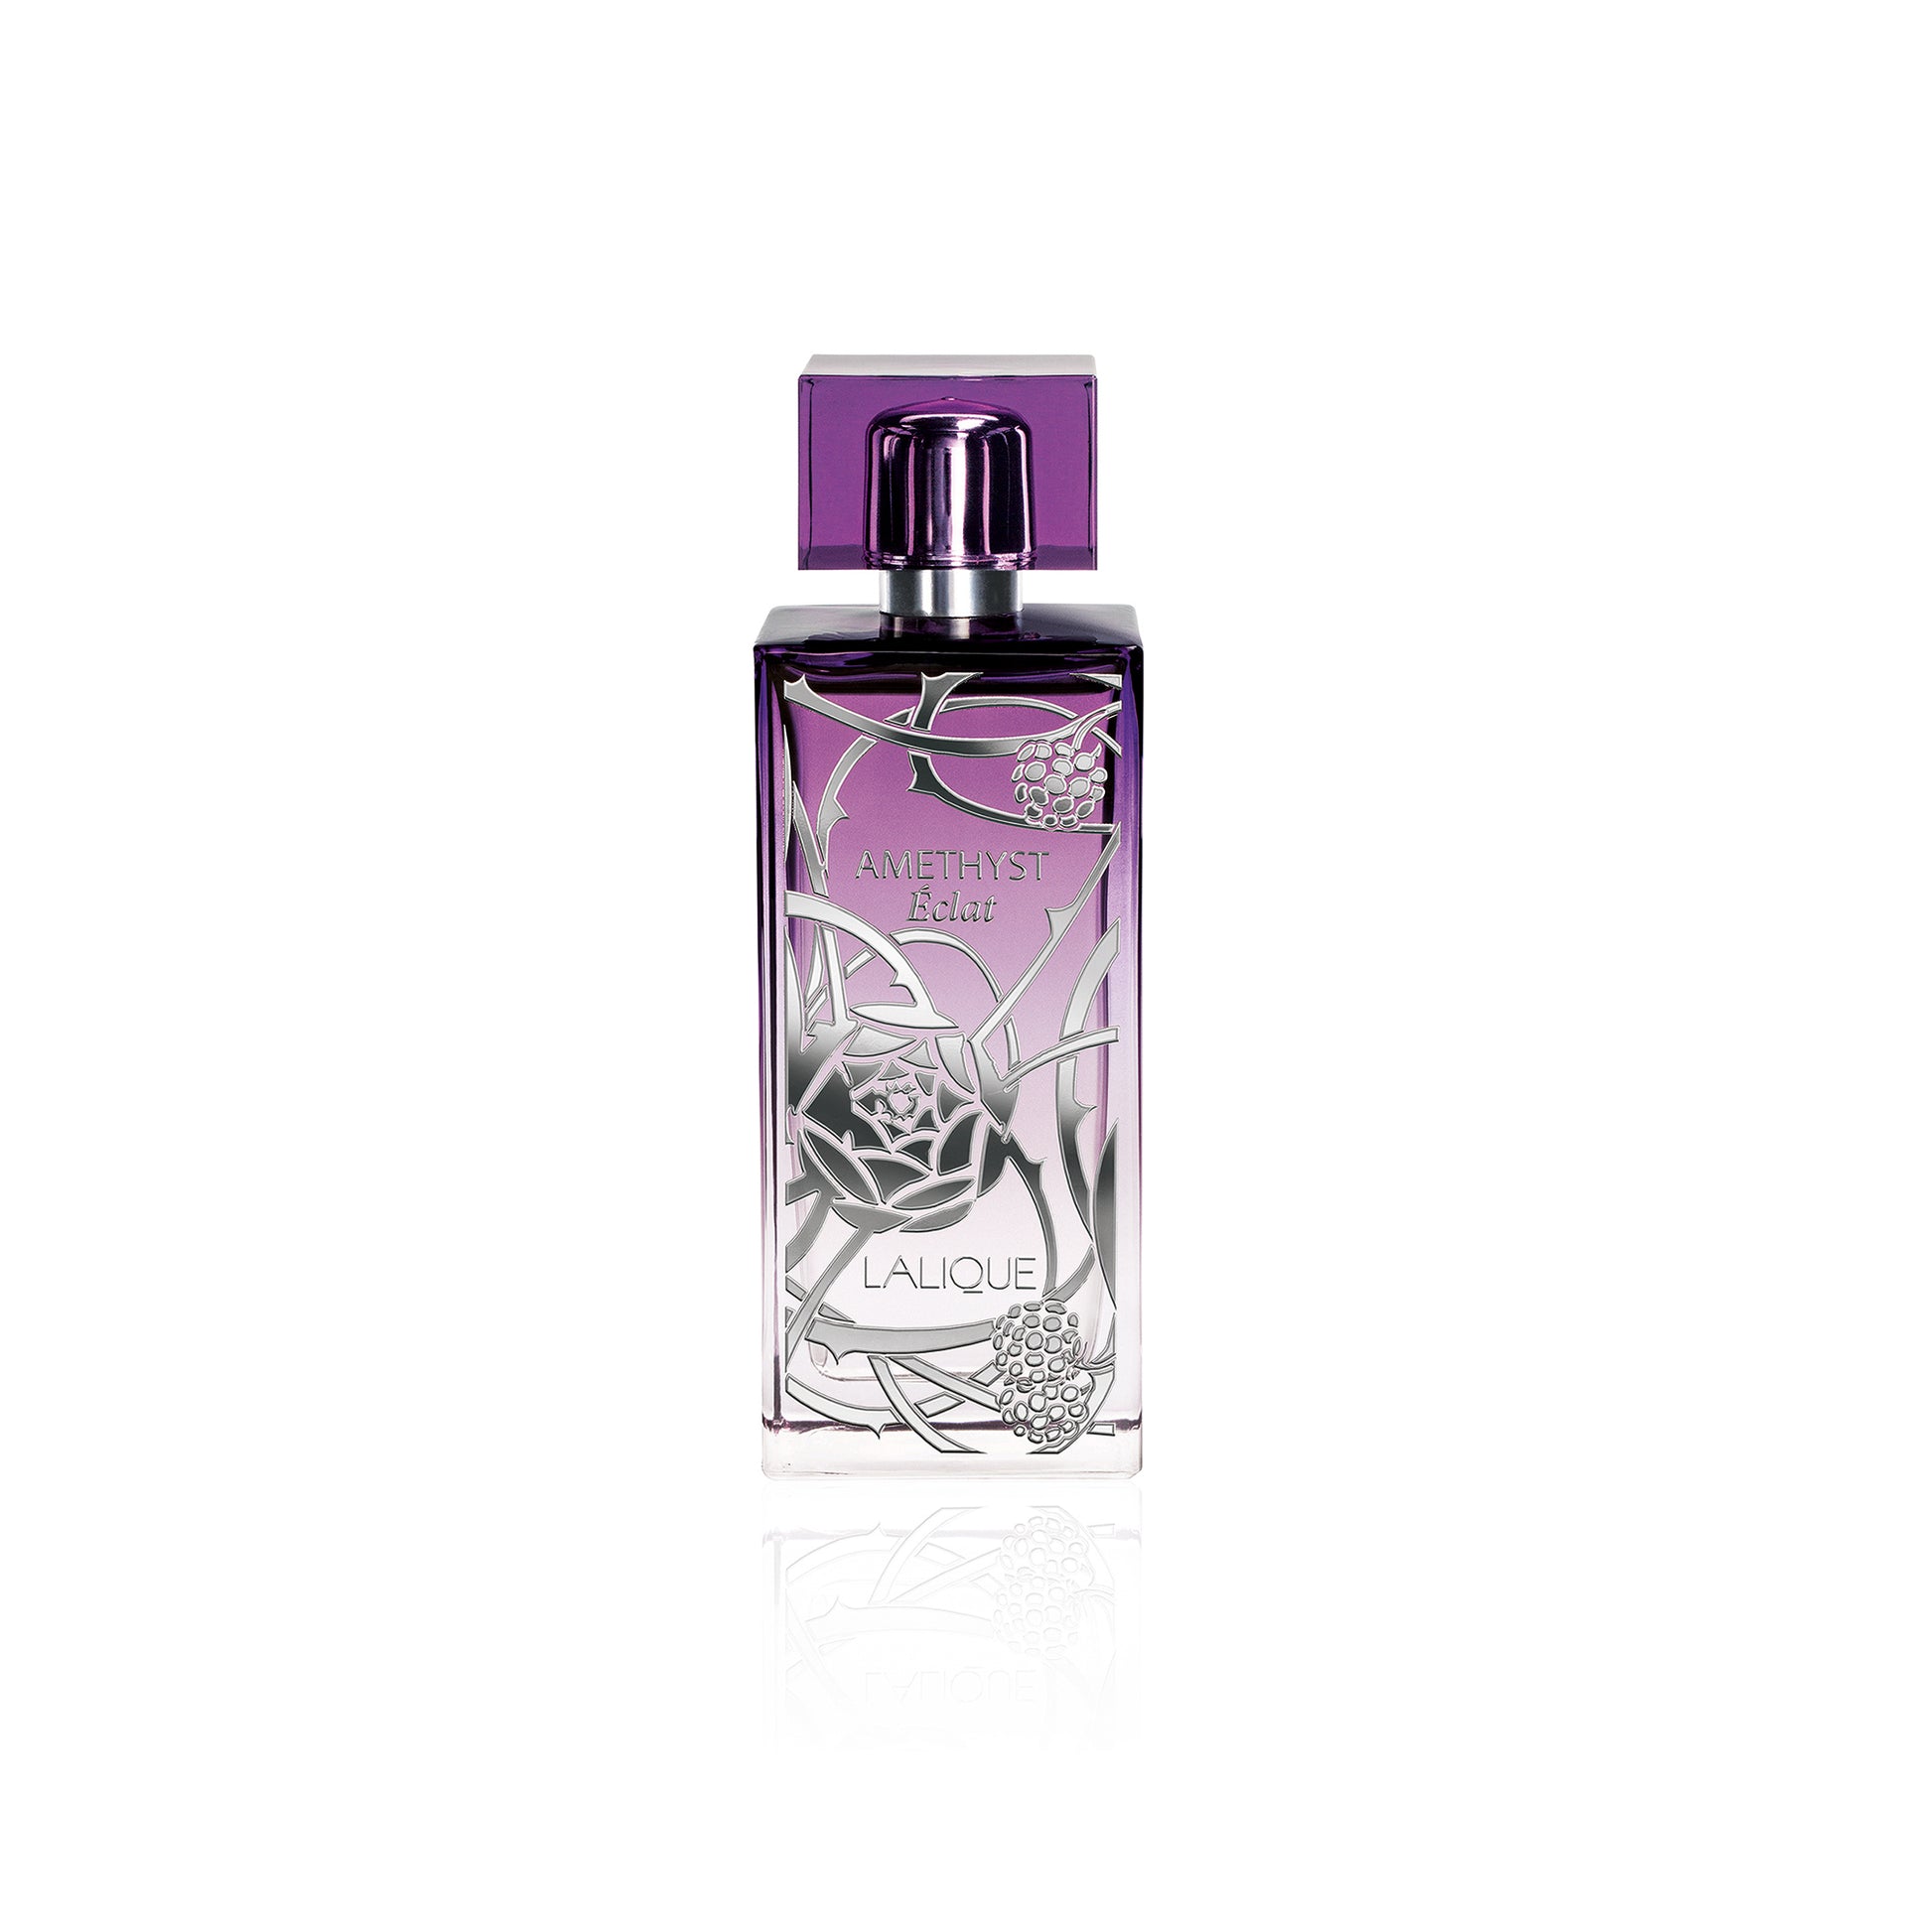 Lalique Amethyst Eclat 1.7 oz Eau de Parfum – So Avant Garde